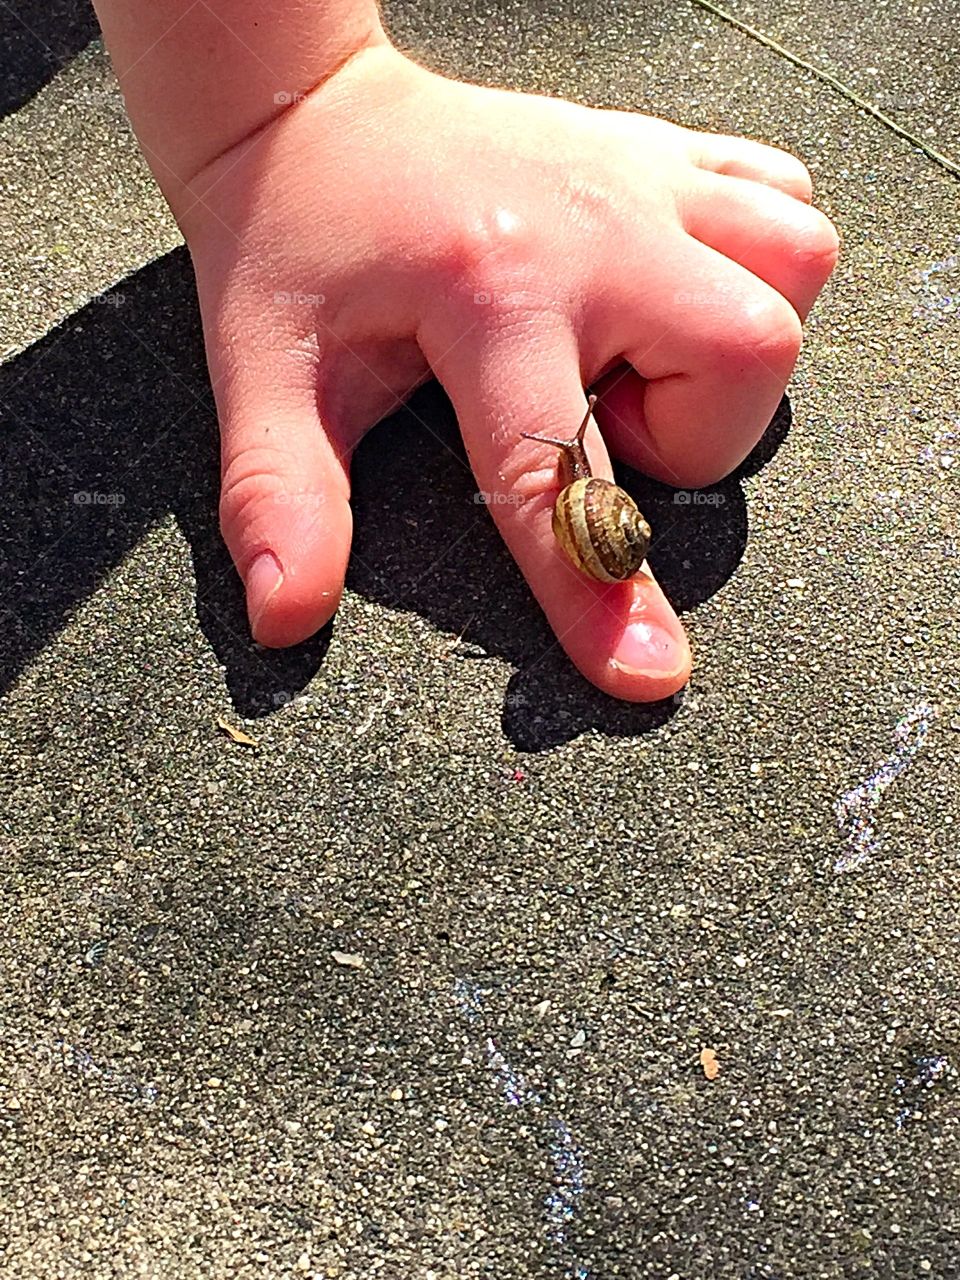 Snail meets boy